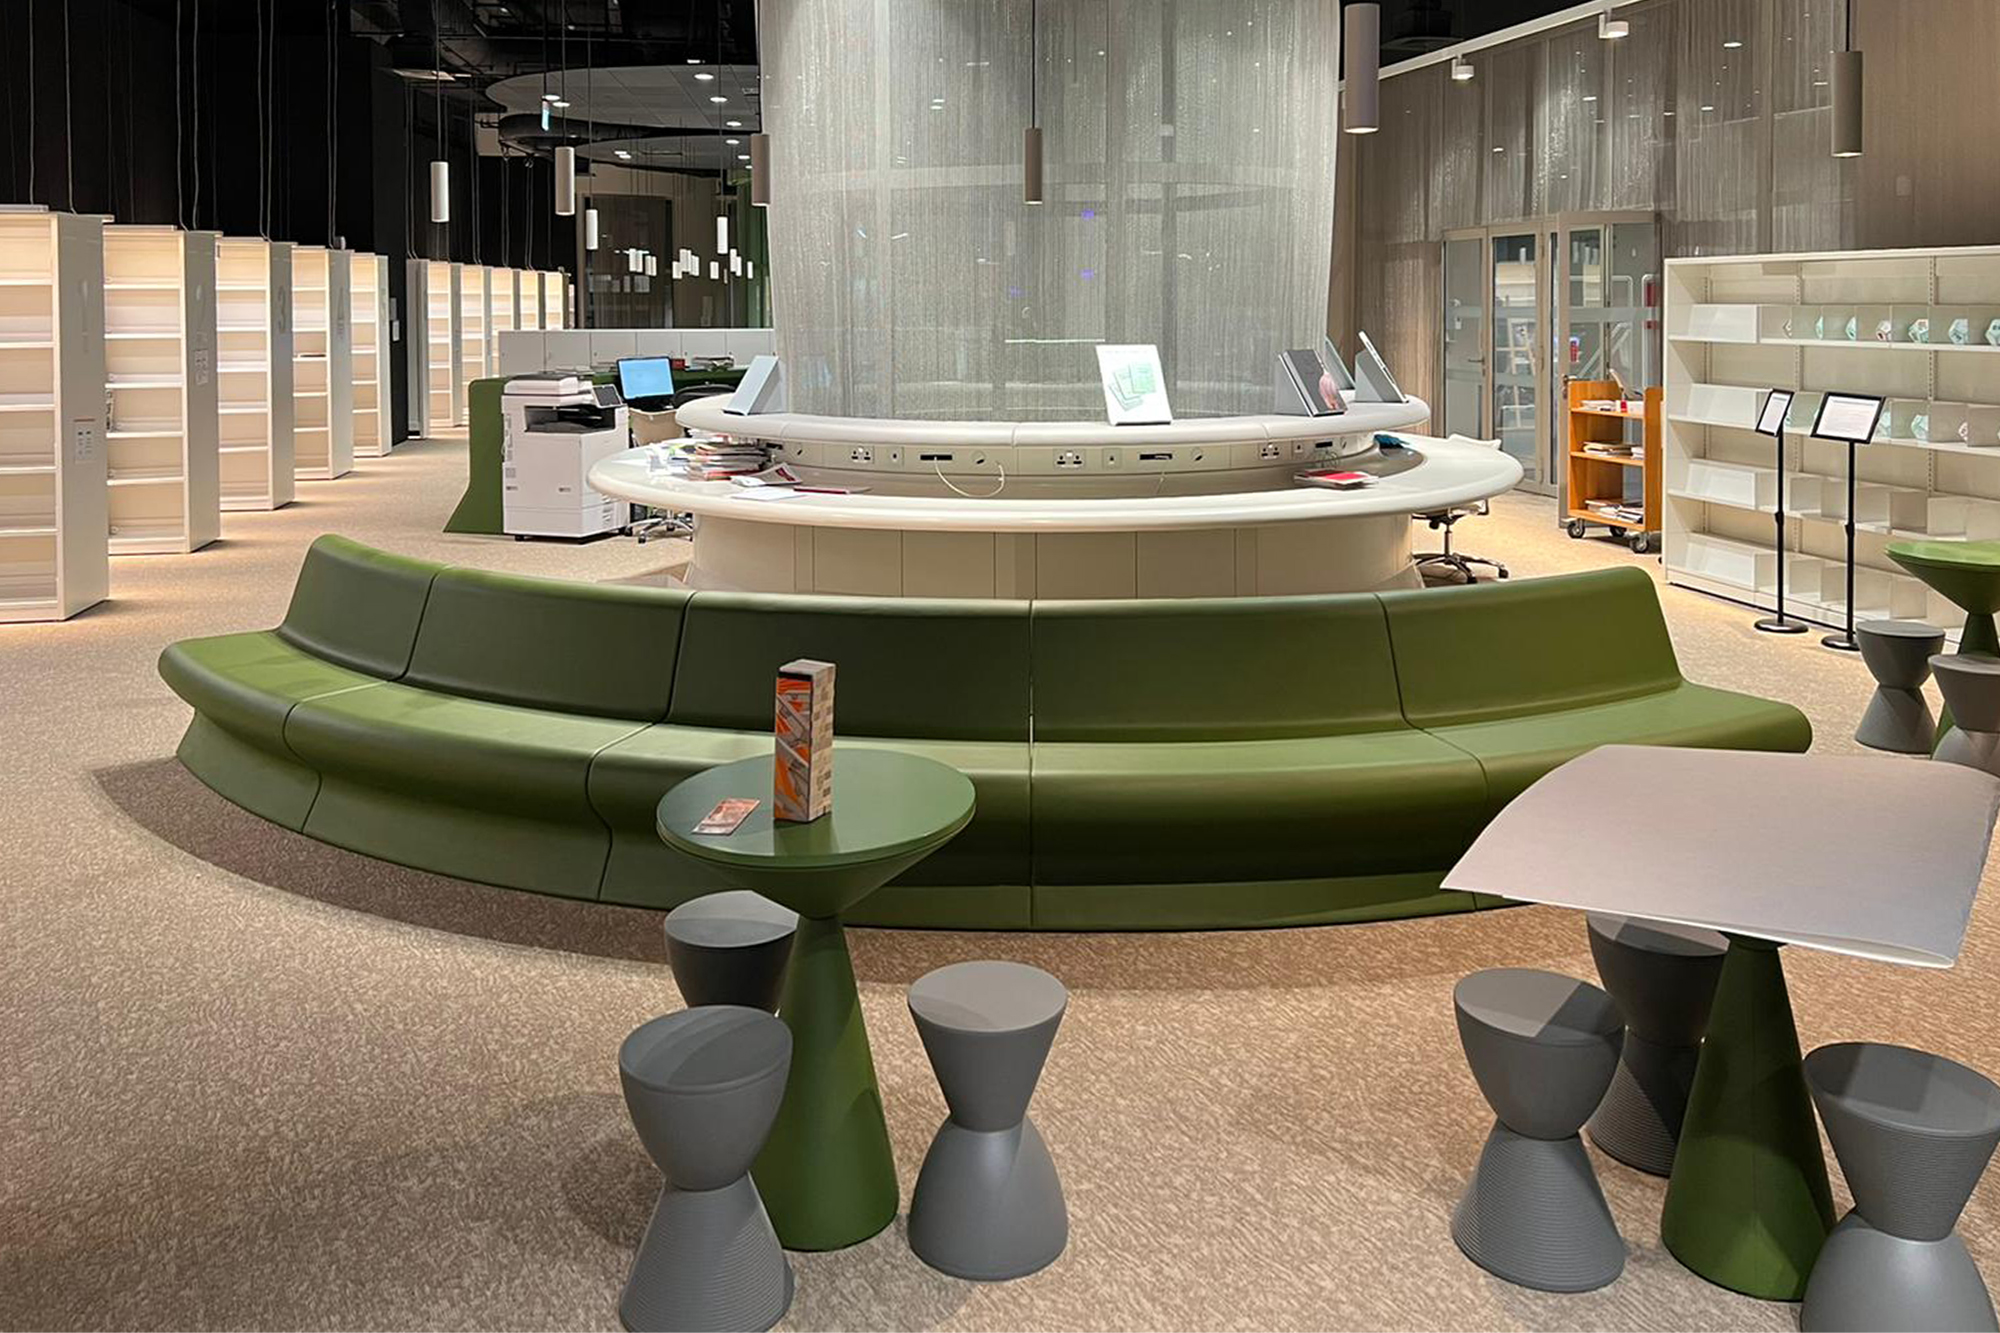 curving green bench, circular tables